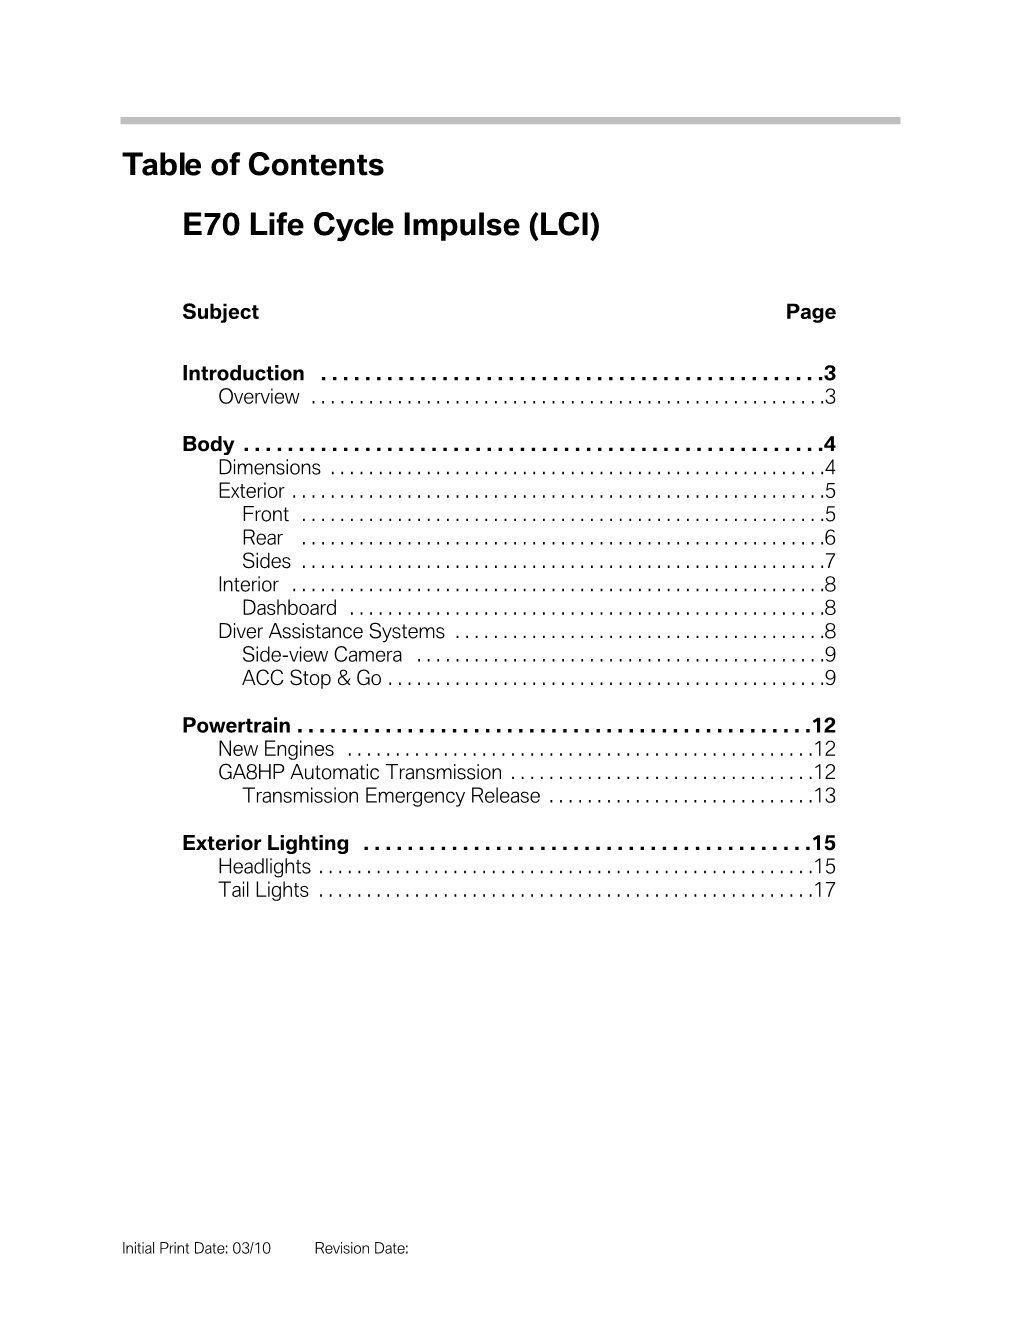 Table of Contents E70 Life Cycle Impulse (LCI)